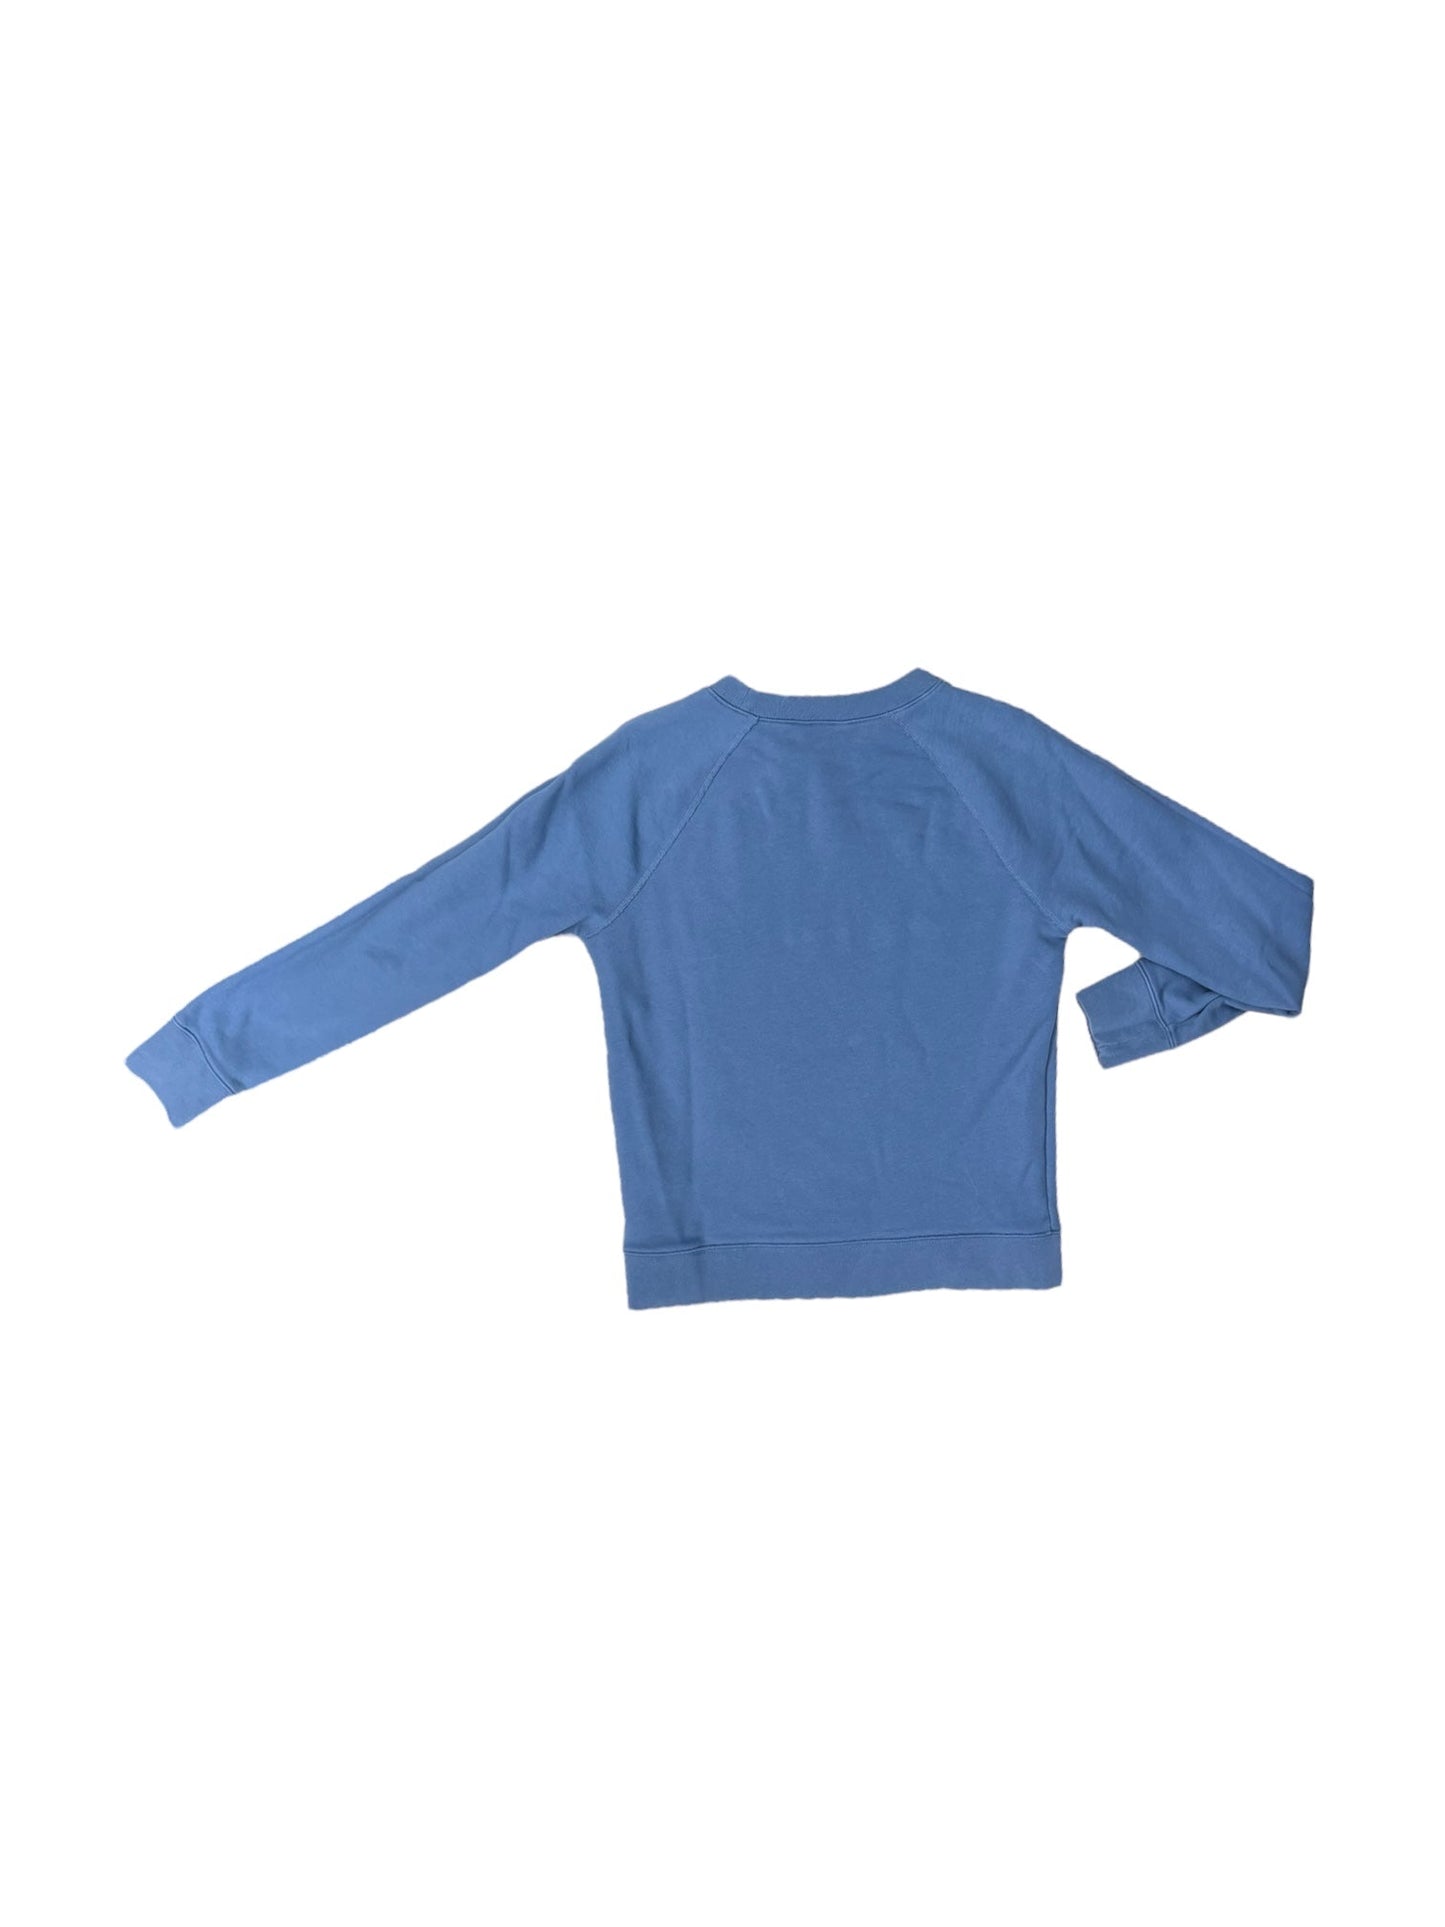 Sweater By J. Crew  Size: Xs